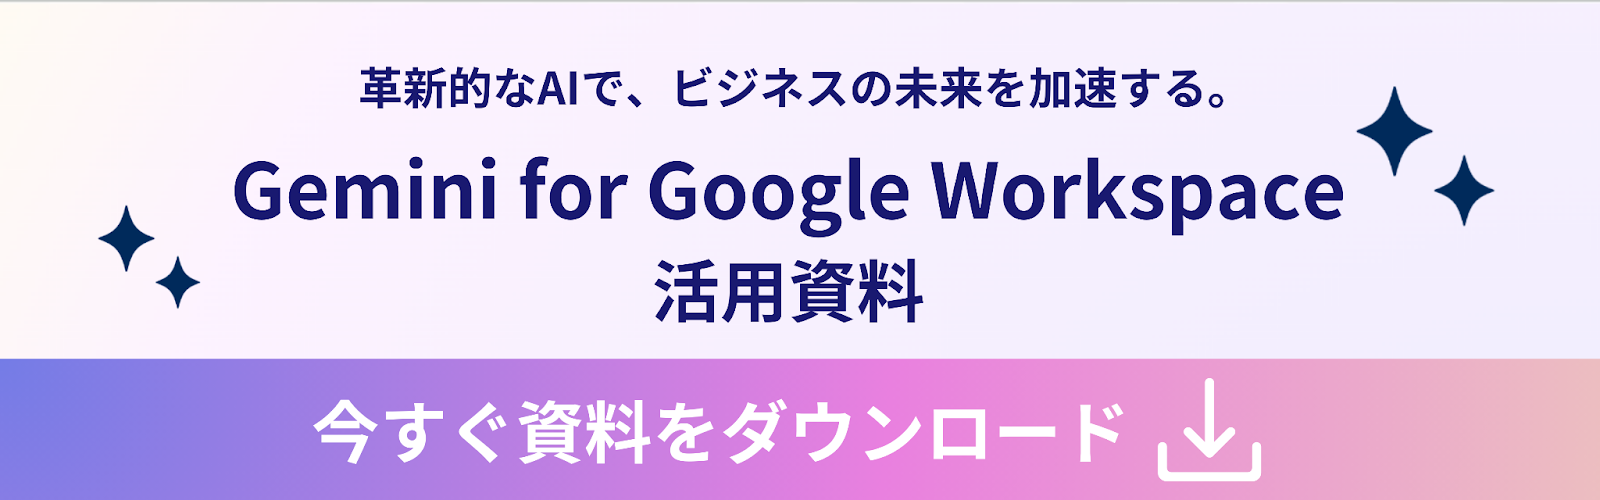 Gemini-for-Google-Workspace-banner